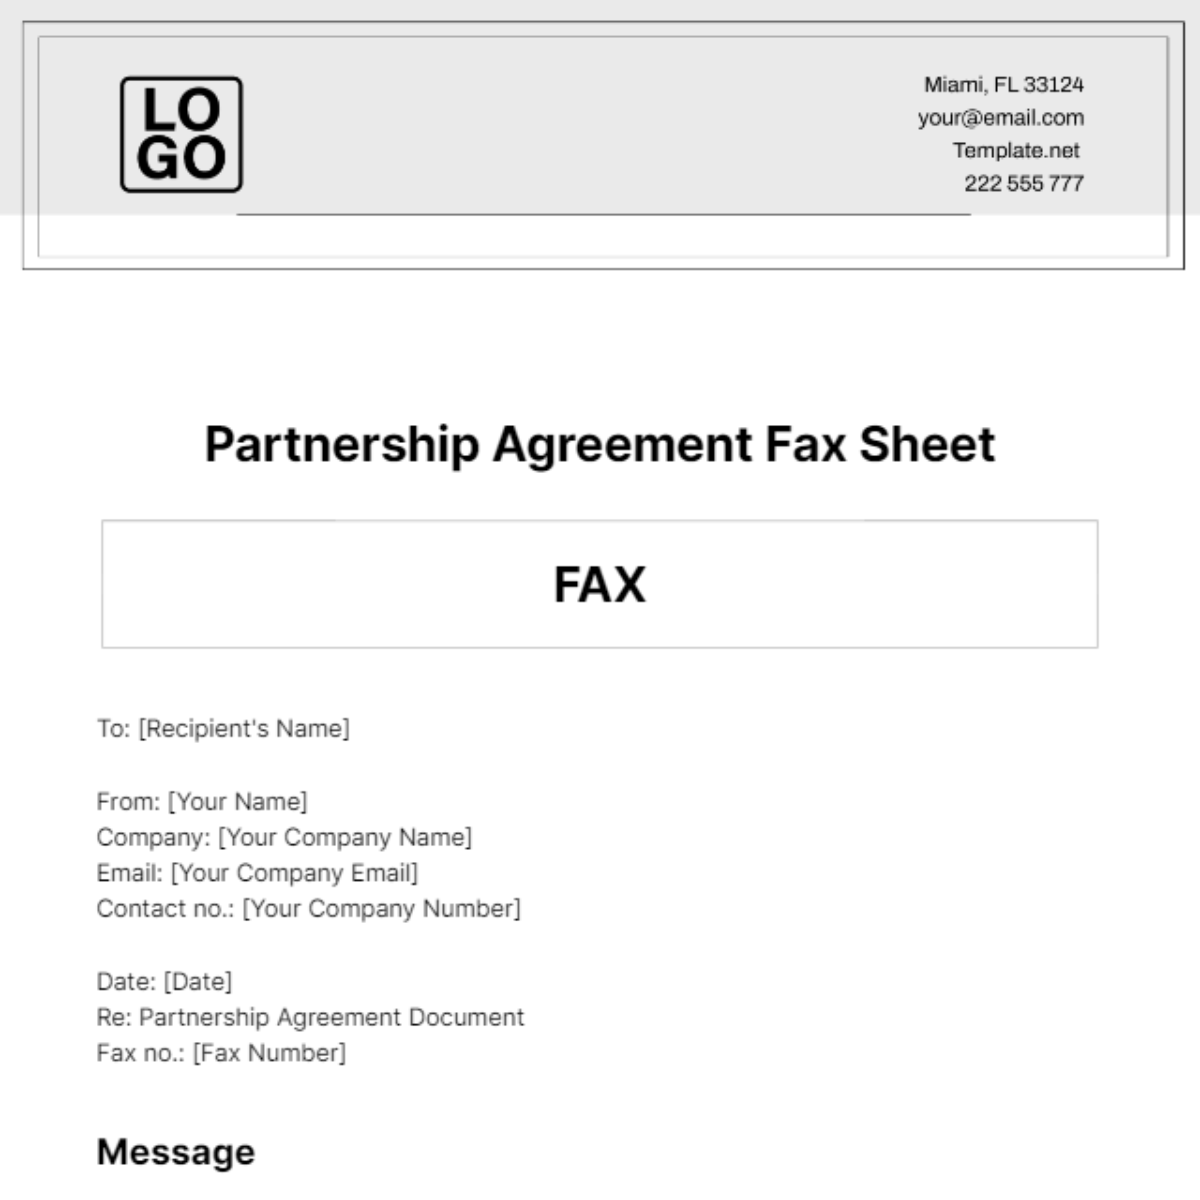 Free Partnership Agreement Fax Sheet Template